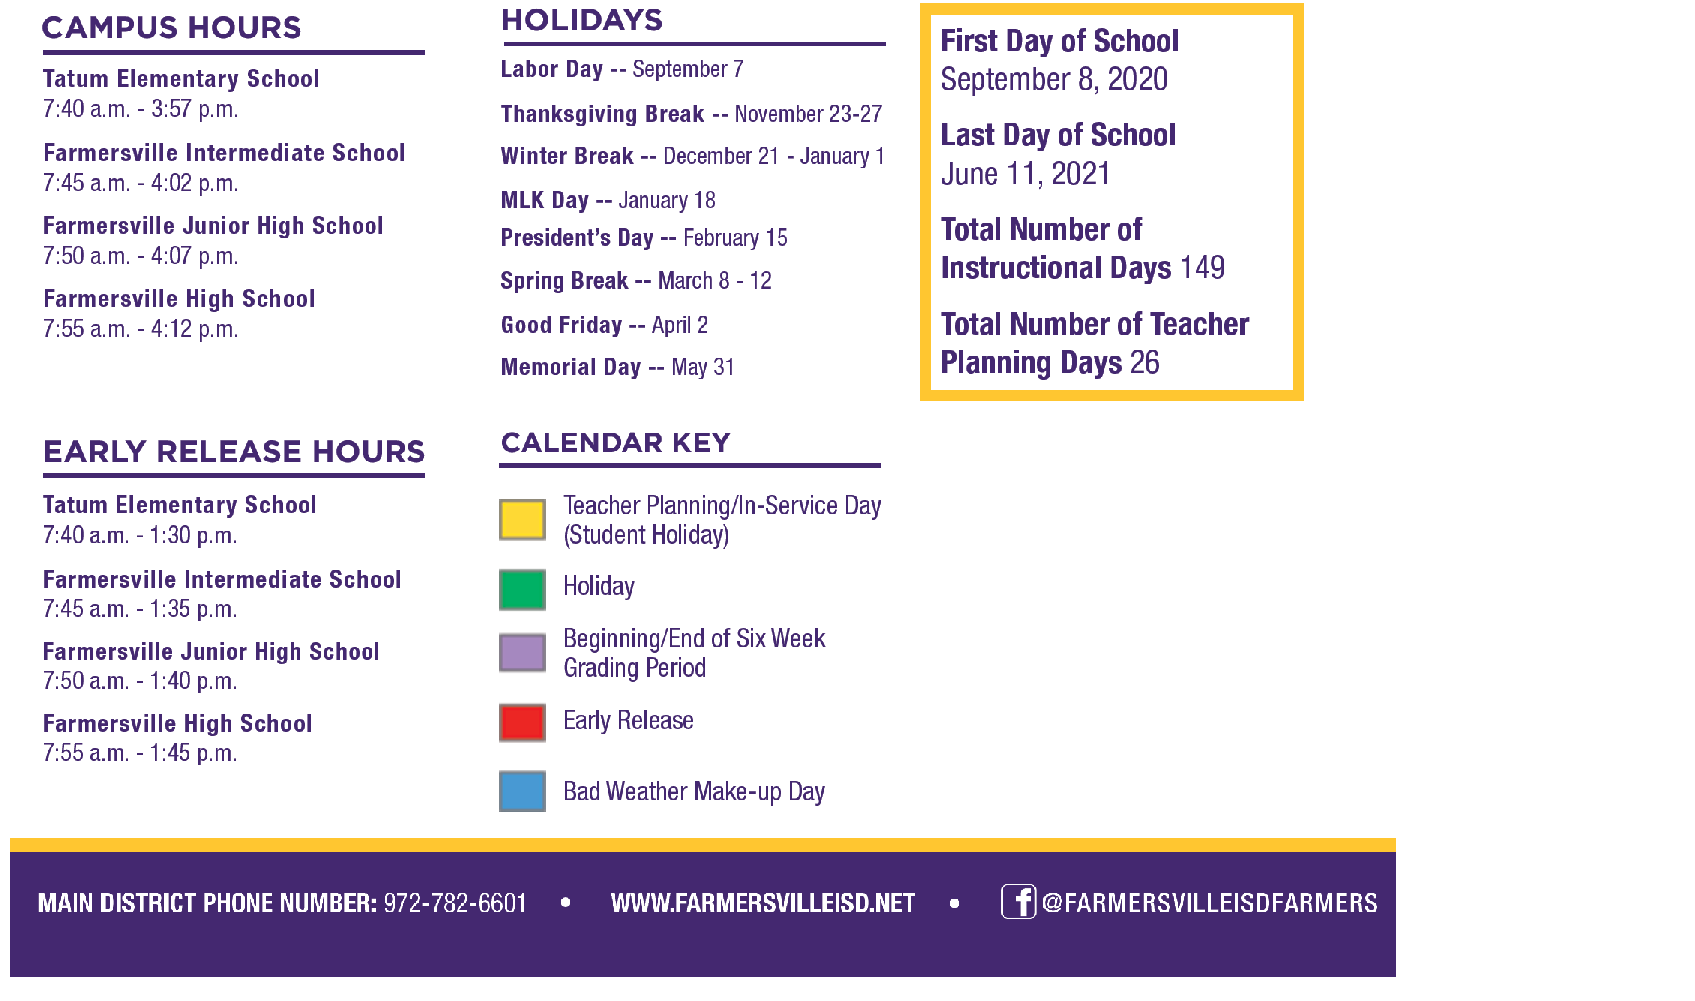 District School Academic Calendar Key for Farmersville High School